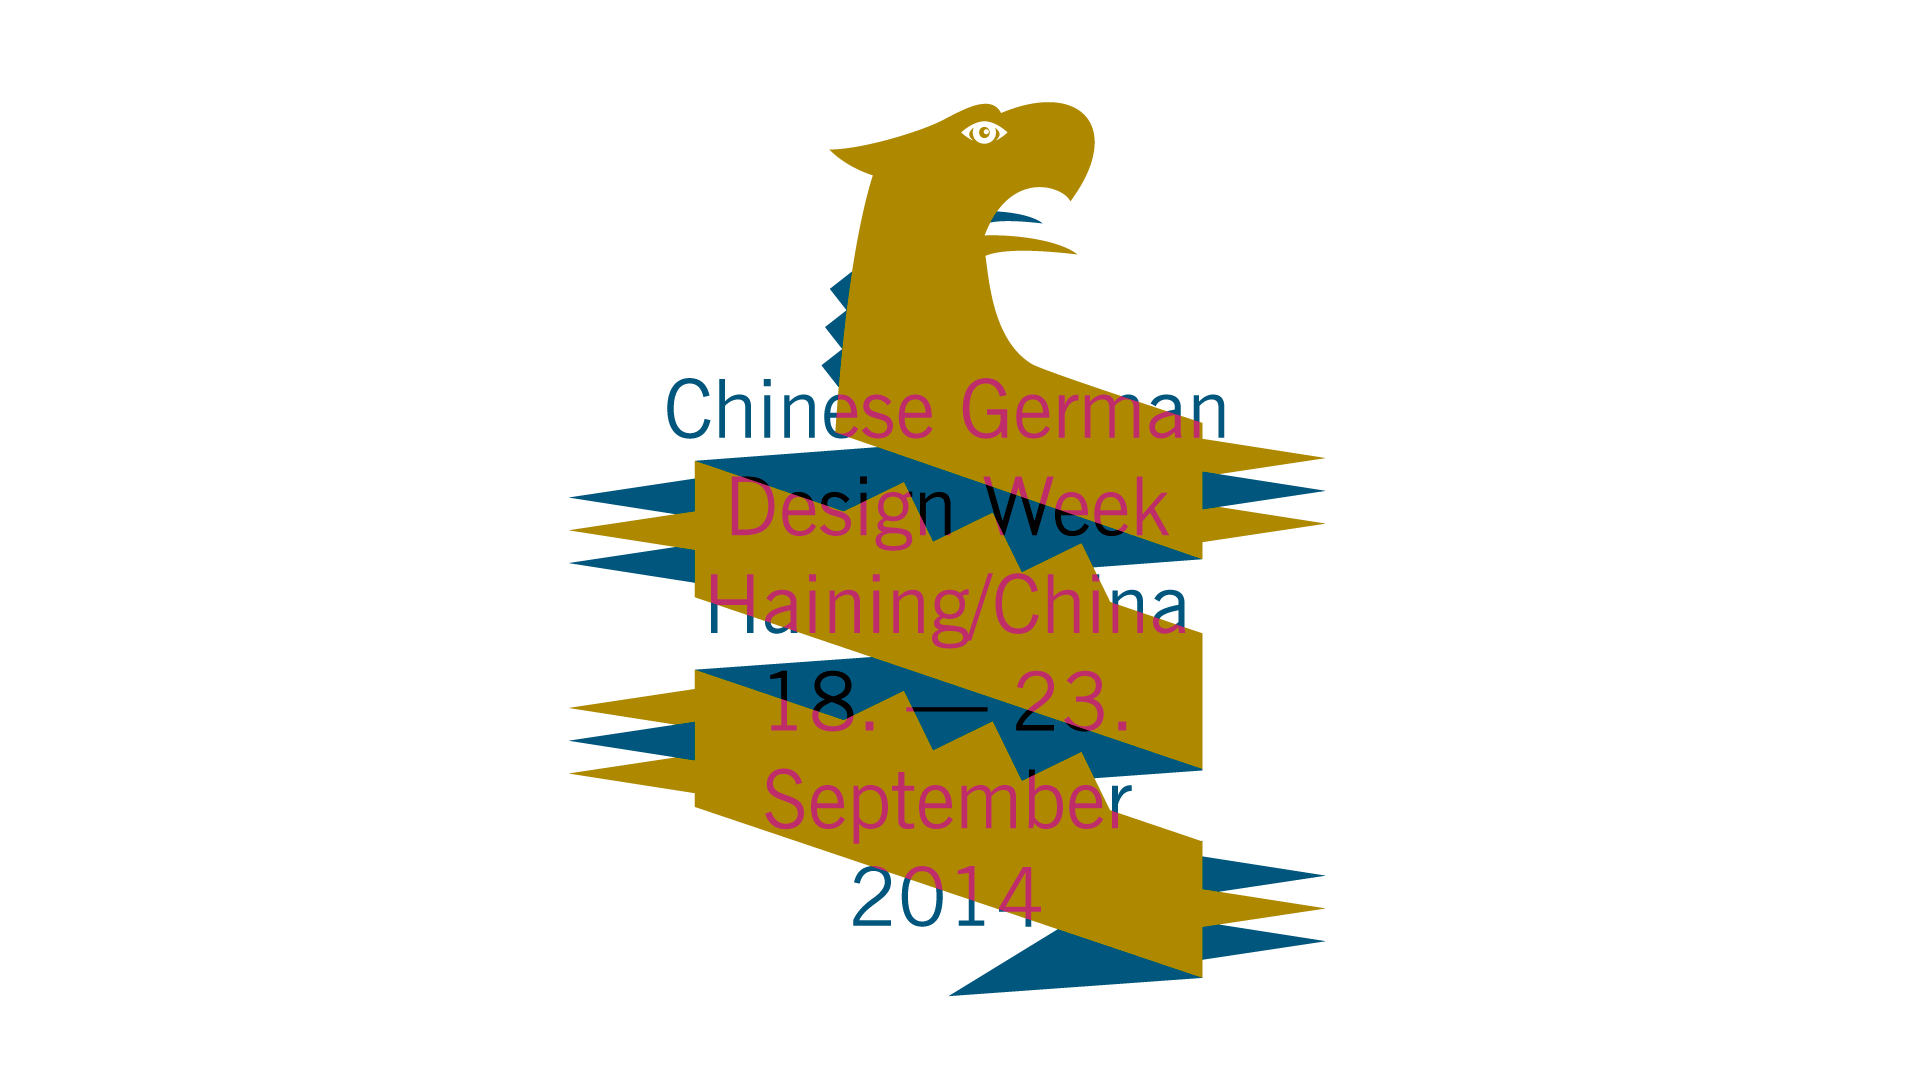 Haining Economic & Information Bureau
Chinese German Design Center